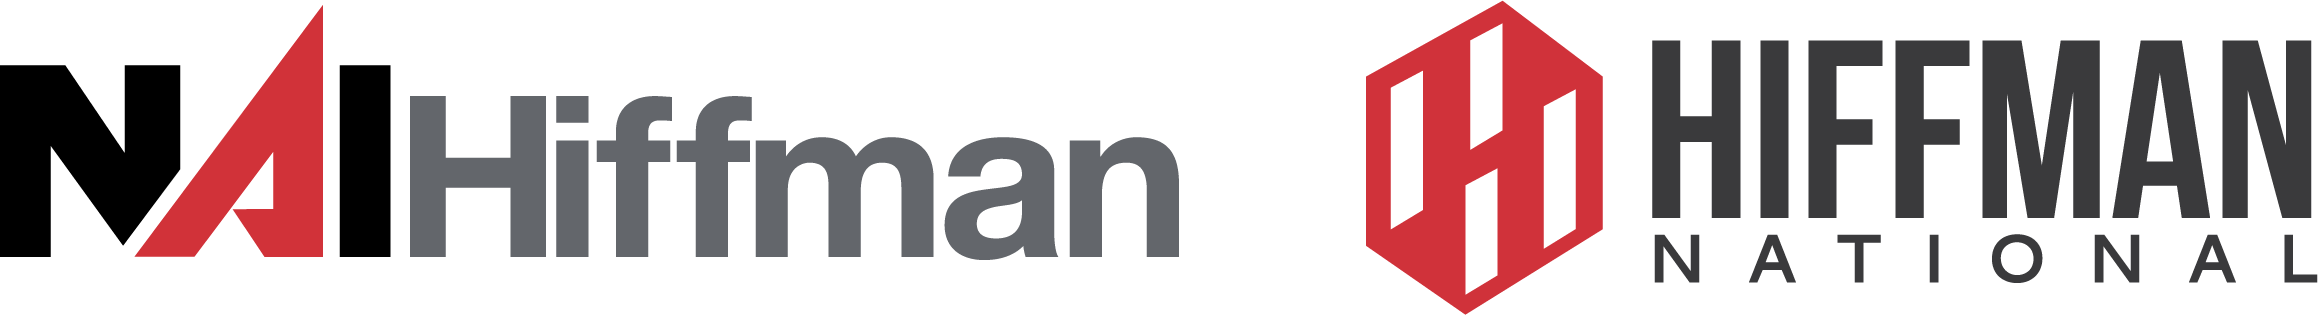 NAI Hiffman | Hiffman National Company Logo